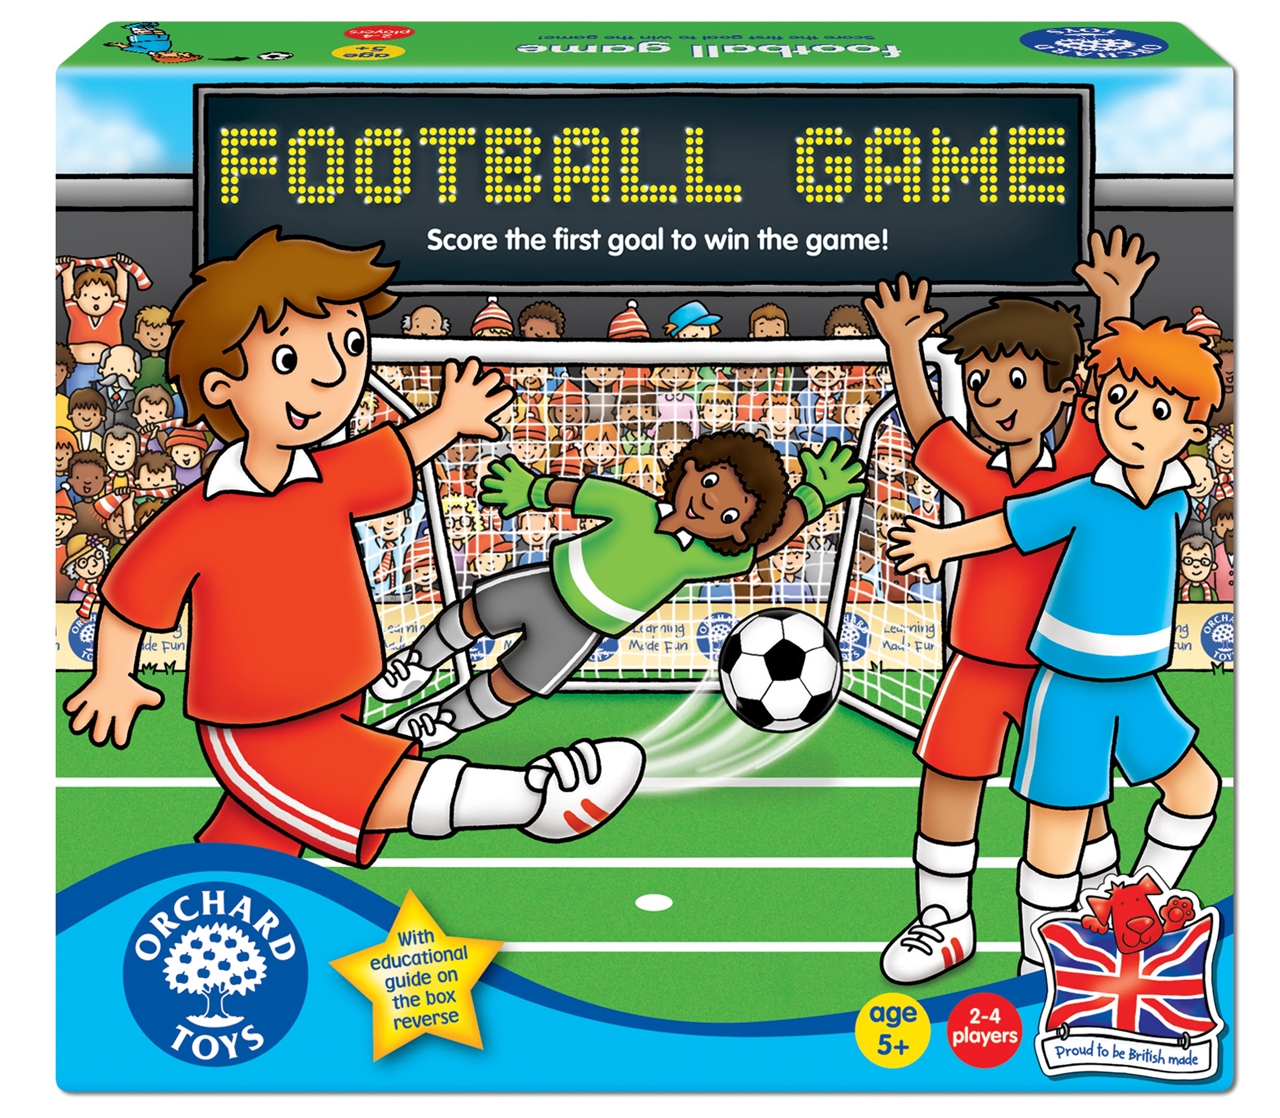 Joc de societate - Meciul de fotbal FOOTBALL GAME - Orchard Toys